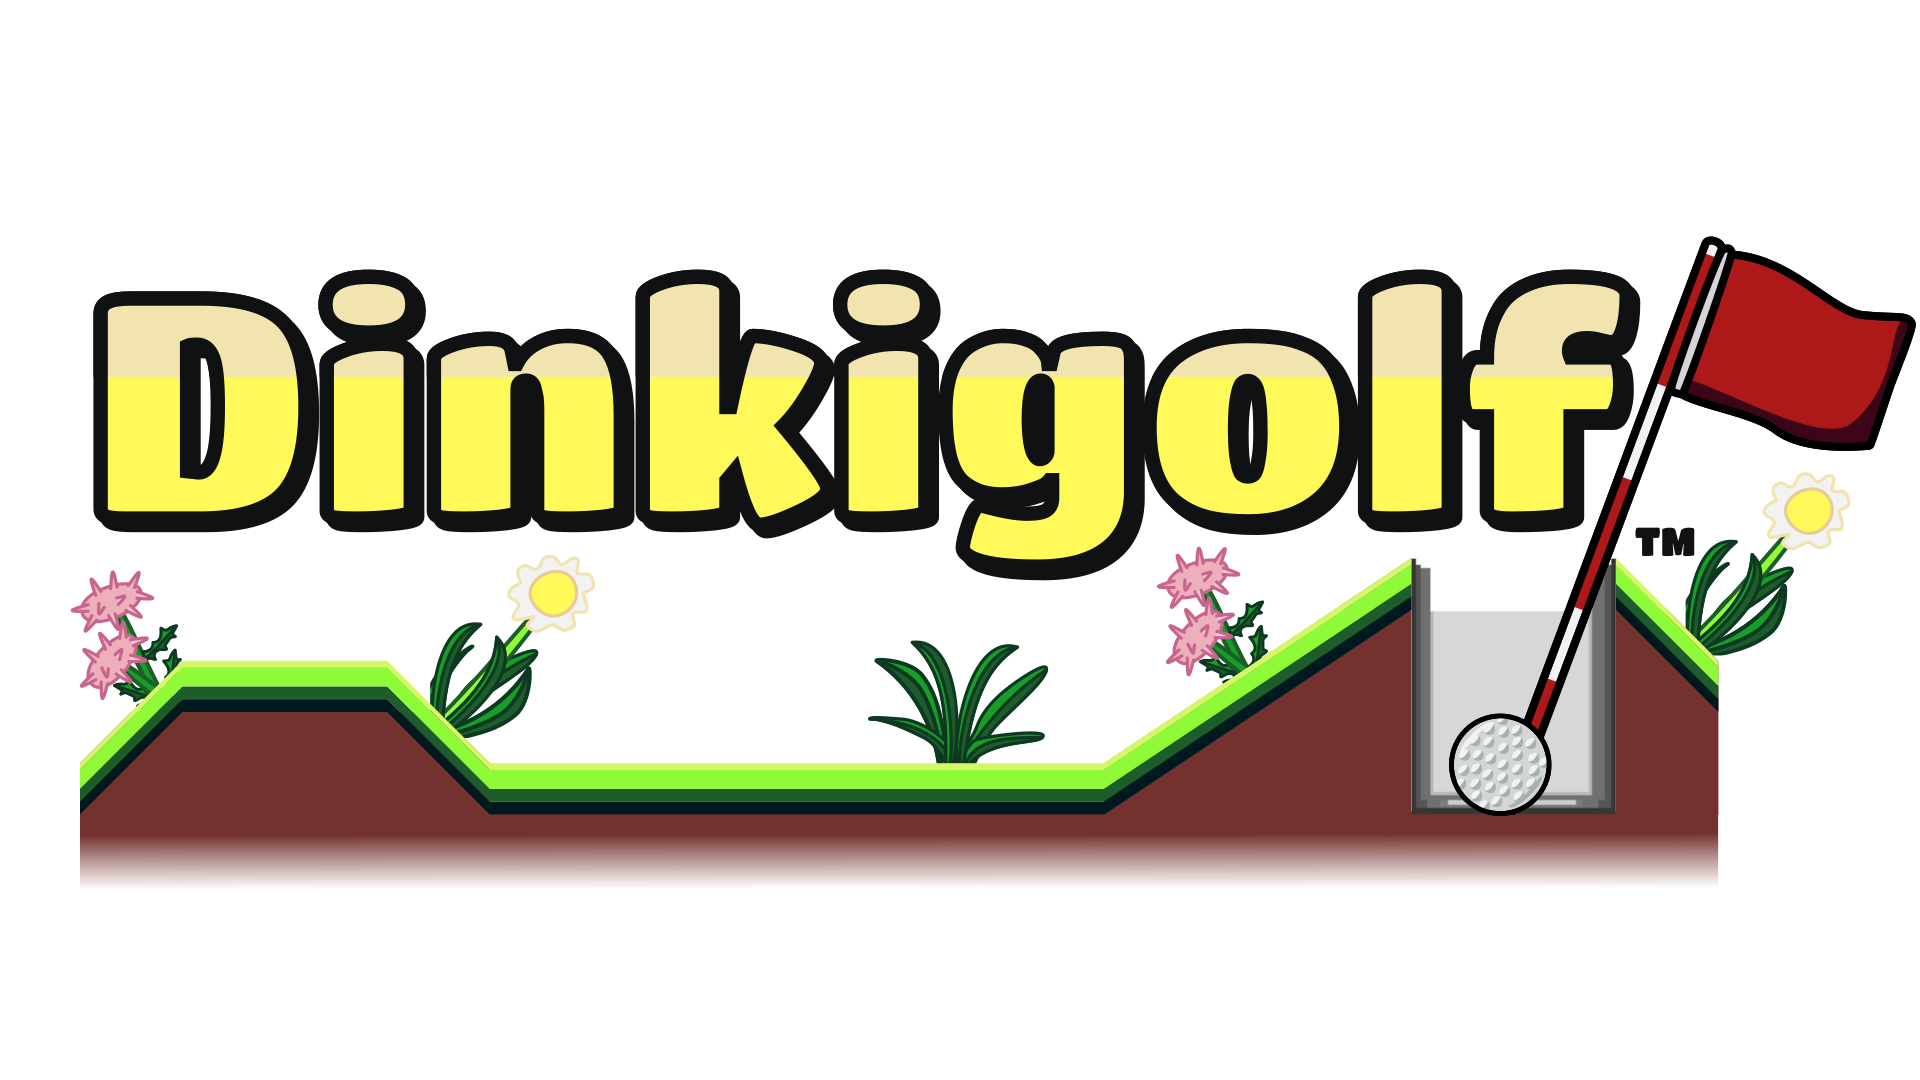 Dinkigolf Main logo